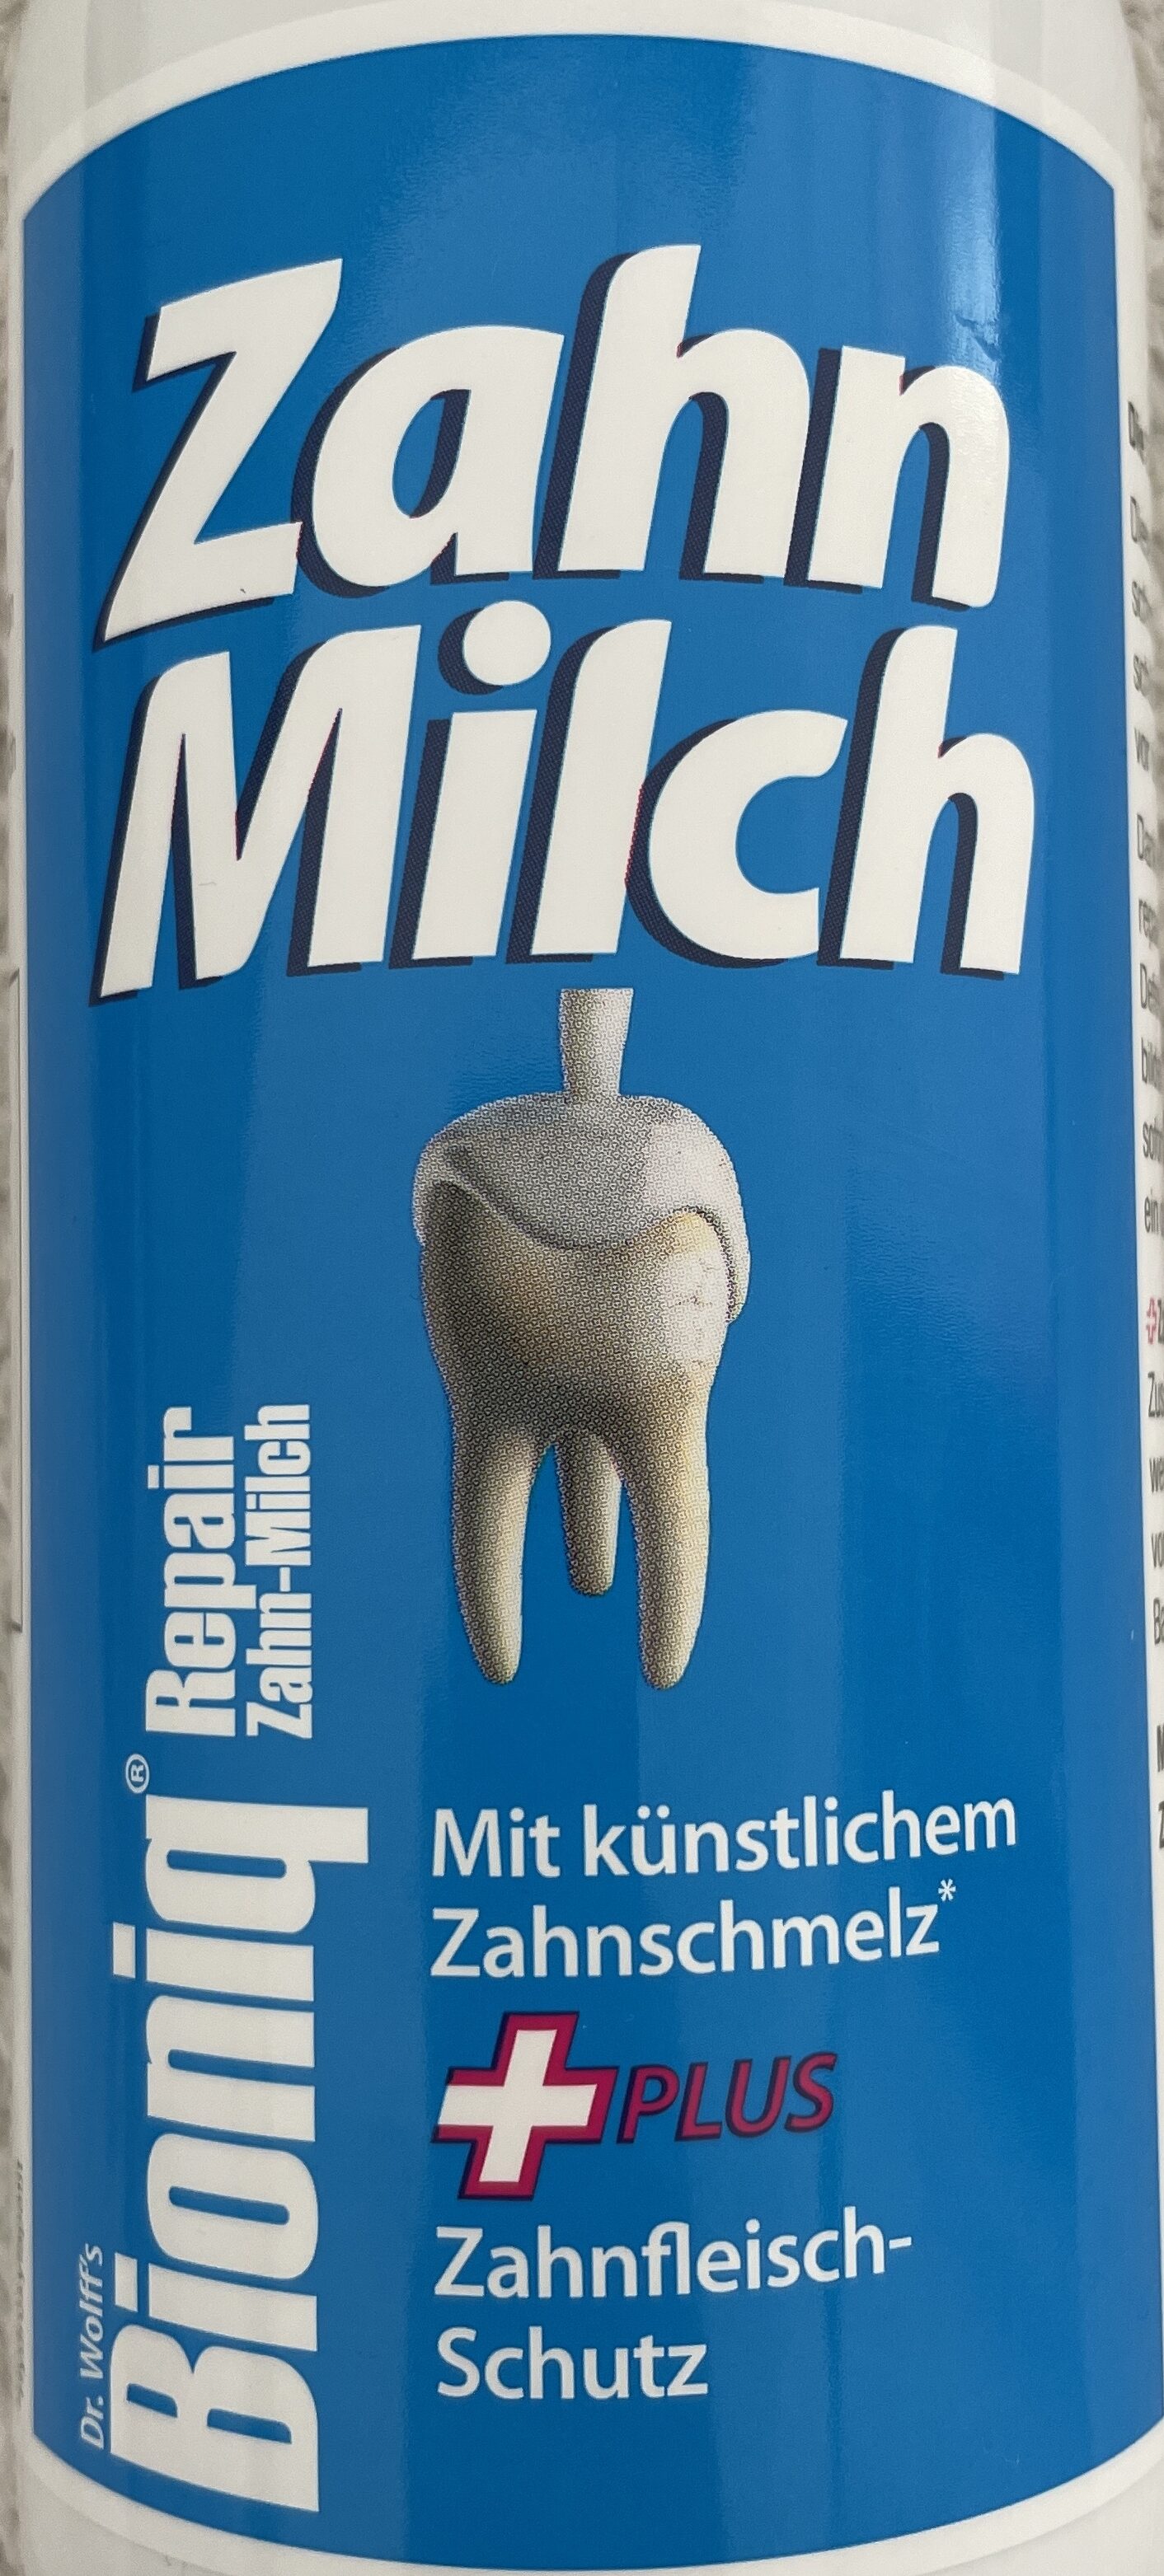 Repair Zahn-Milch - Product - de